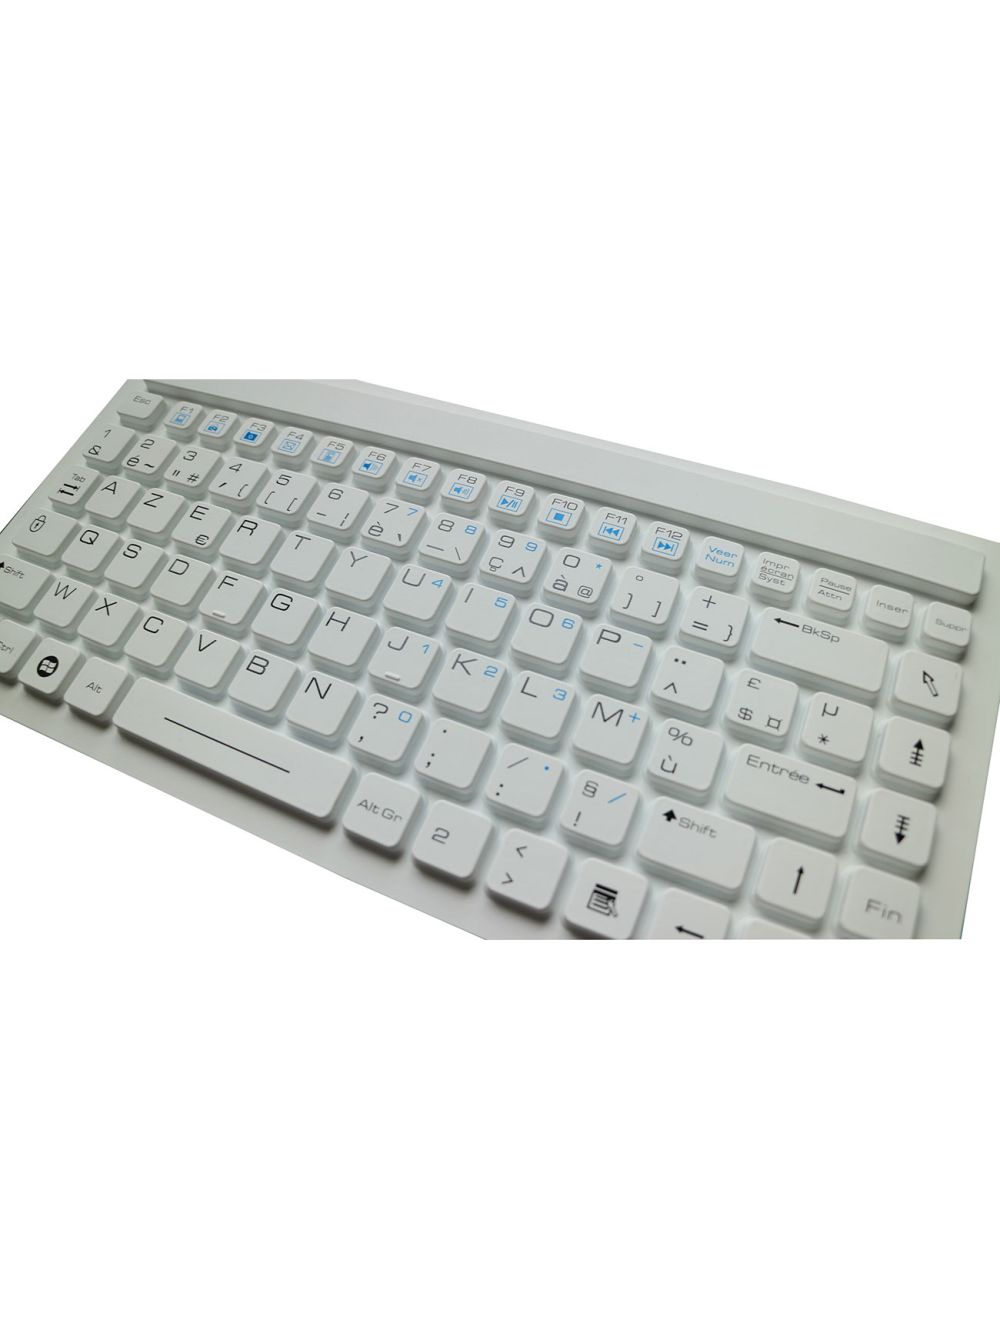 Washable keyboard